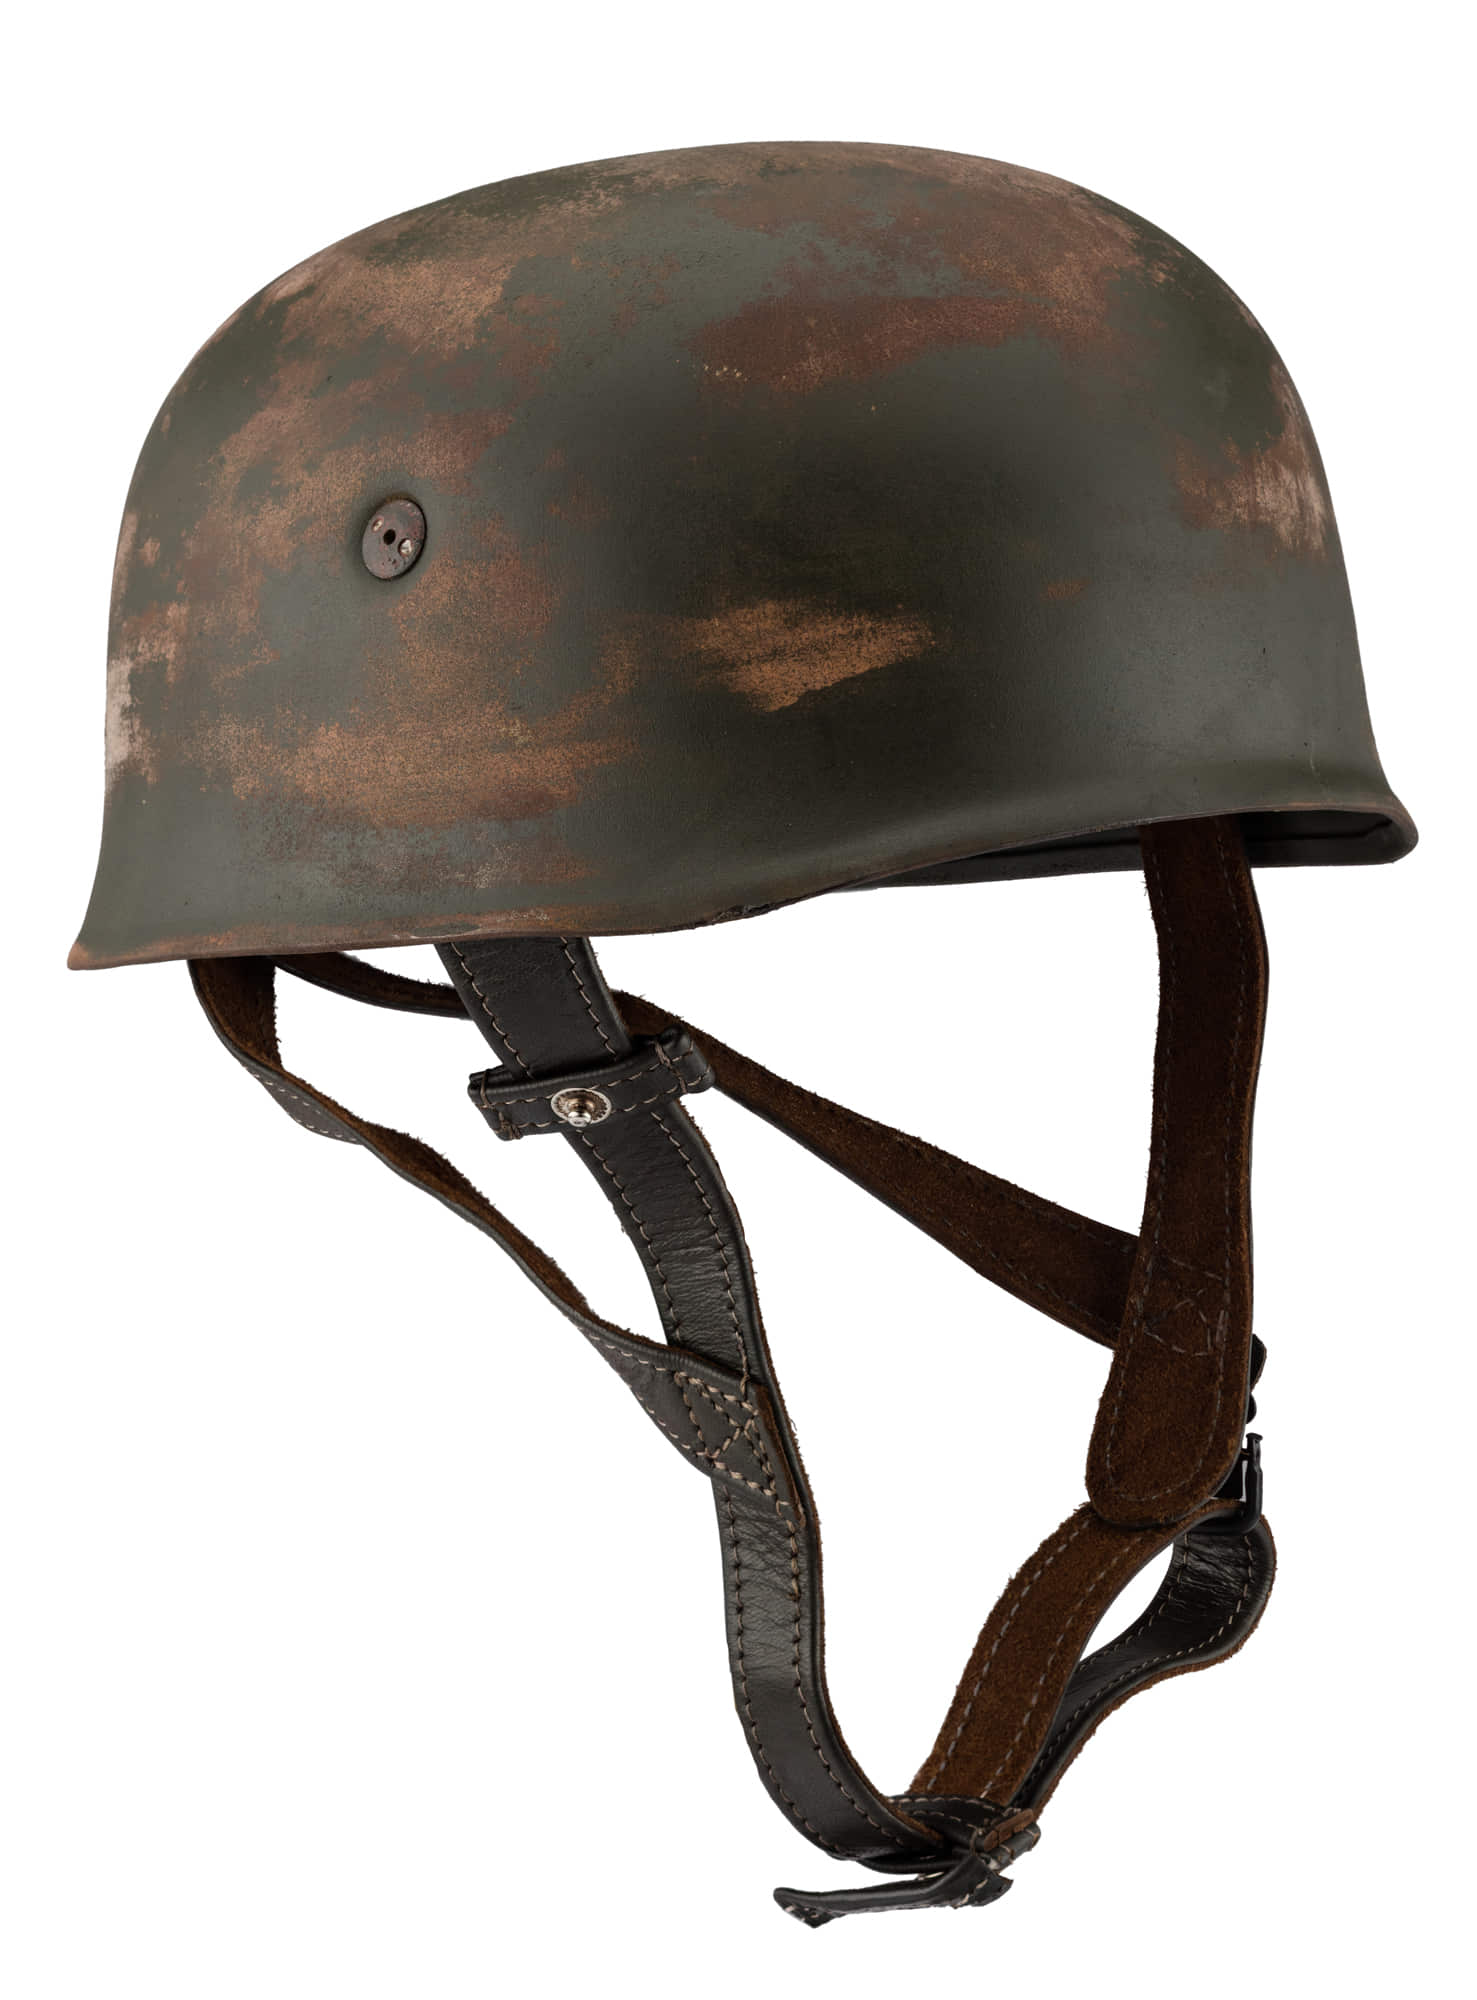 JUGULAIRE cuir de casque allemand WW2 repro 